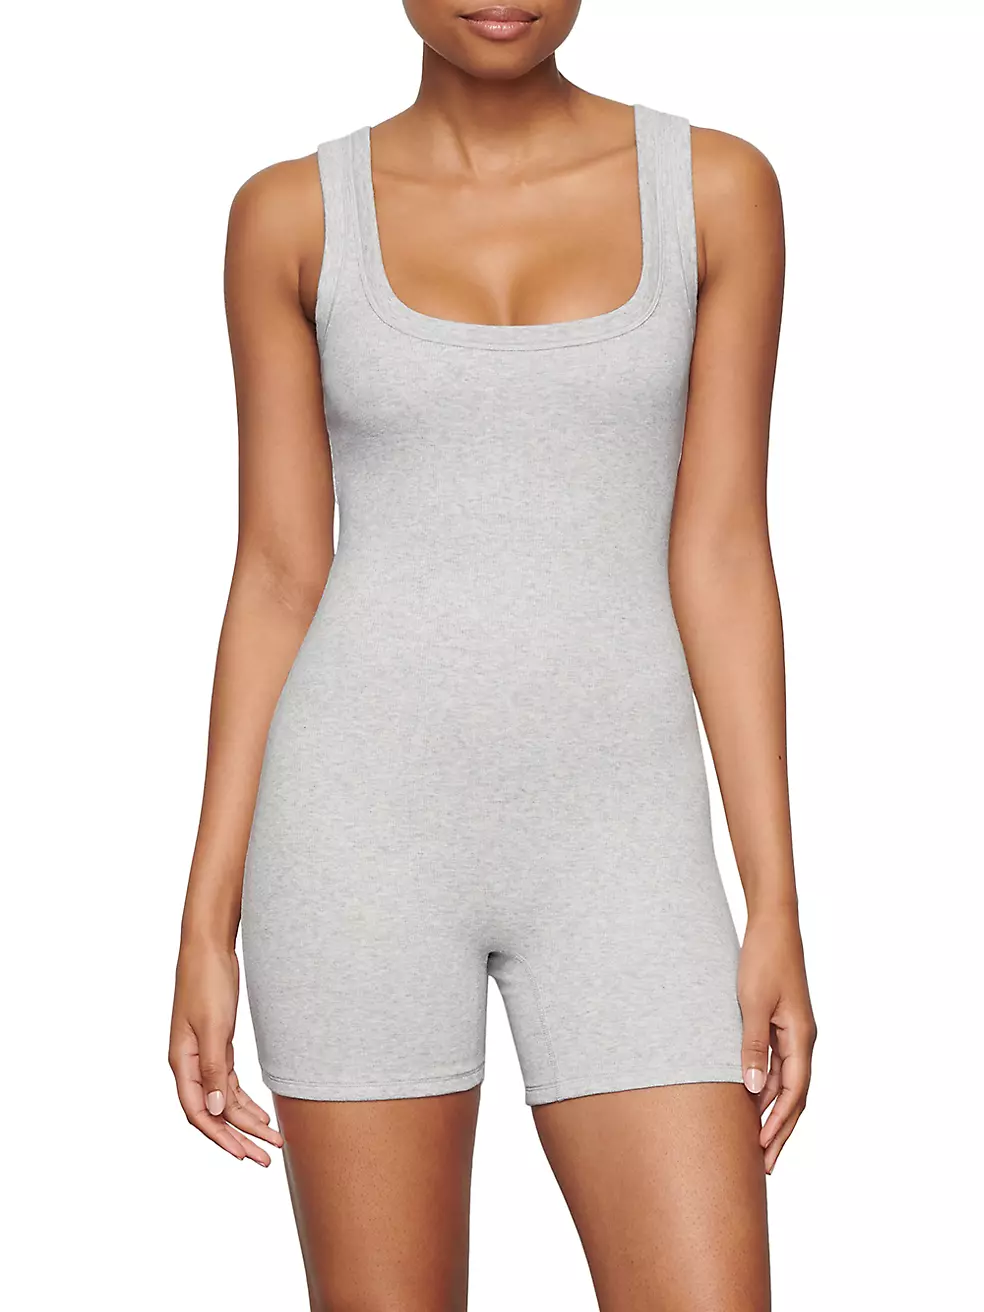 SKIMS NWT Cotton Rib Bodysuit- Deep Sea Size 3X - $34 - From Cutie